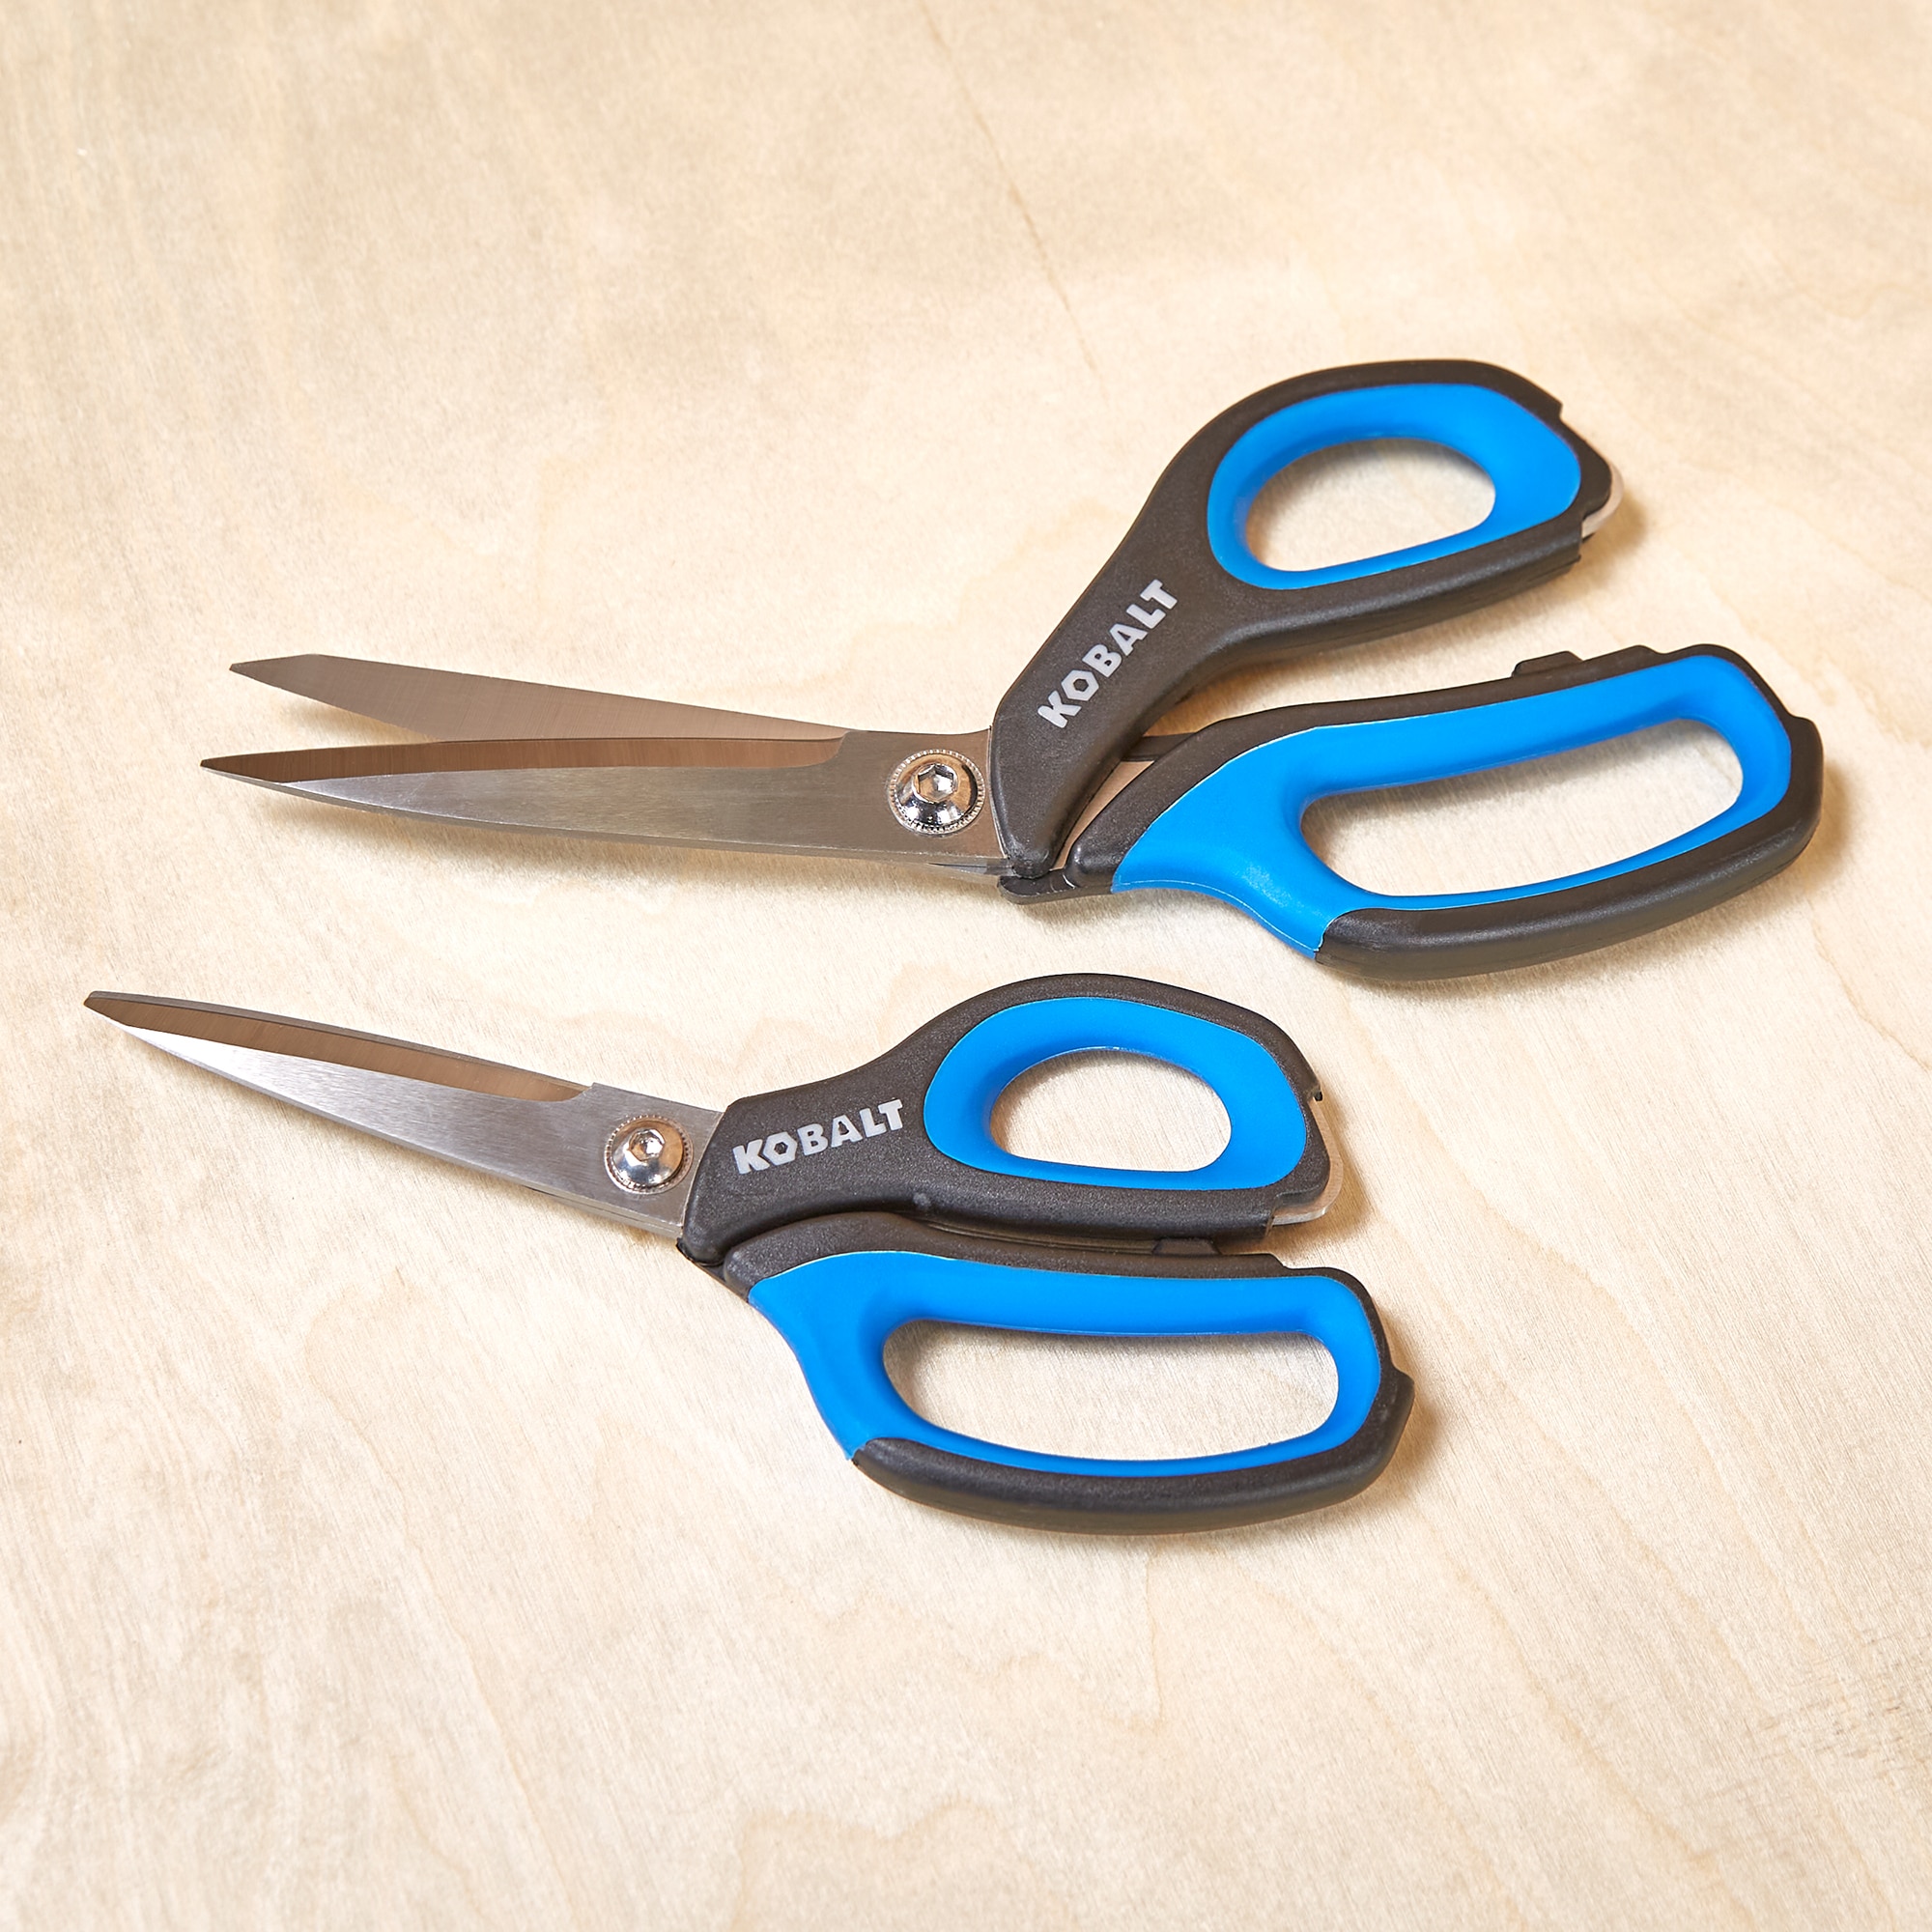 Kobalt 8-in Serrated Molded Grip Scissors in the Scissors